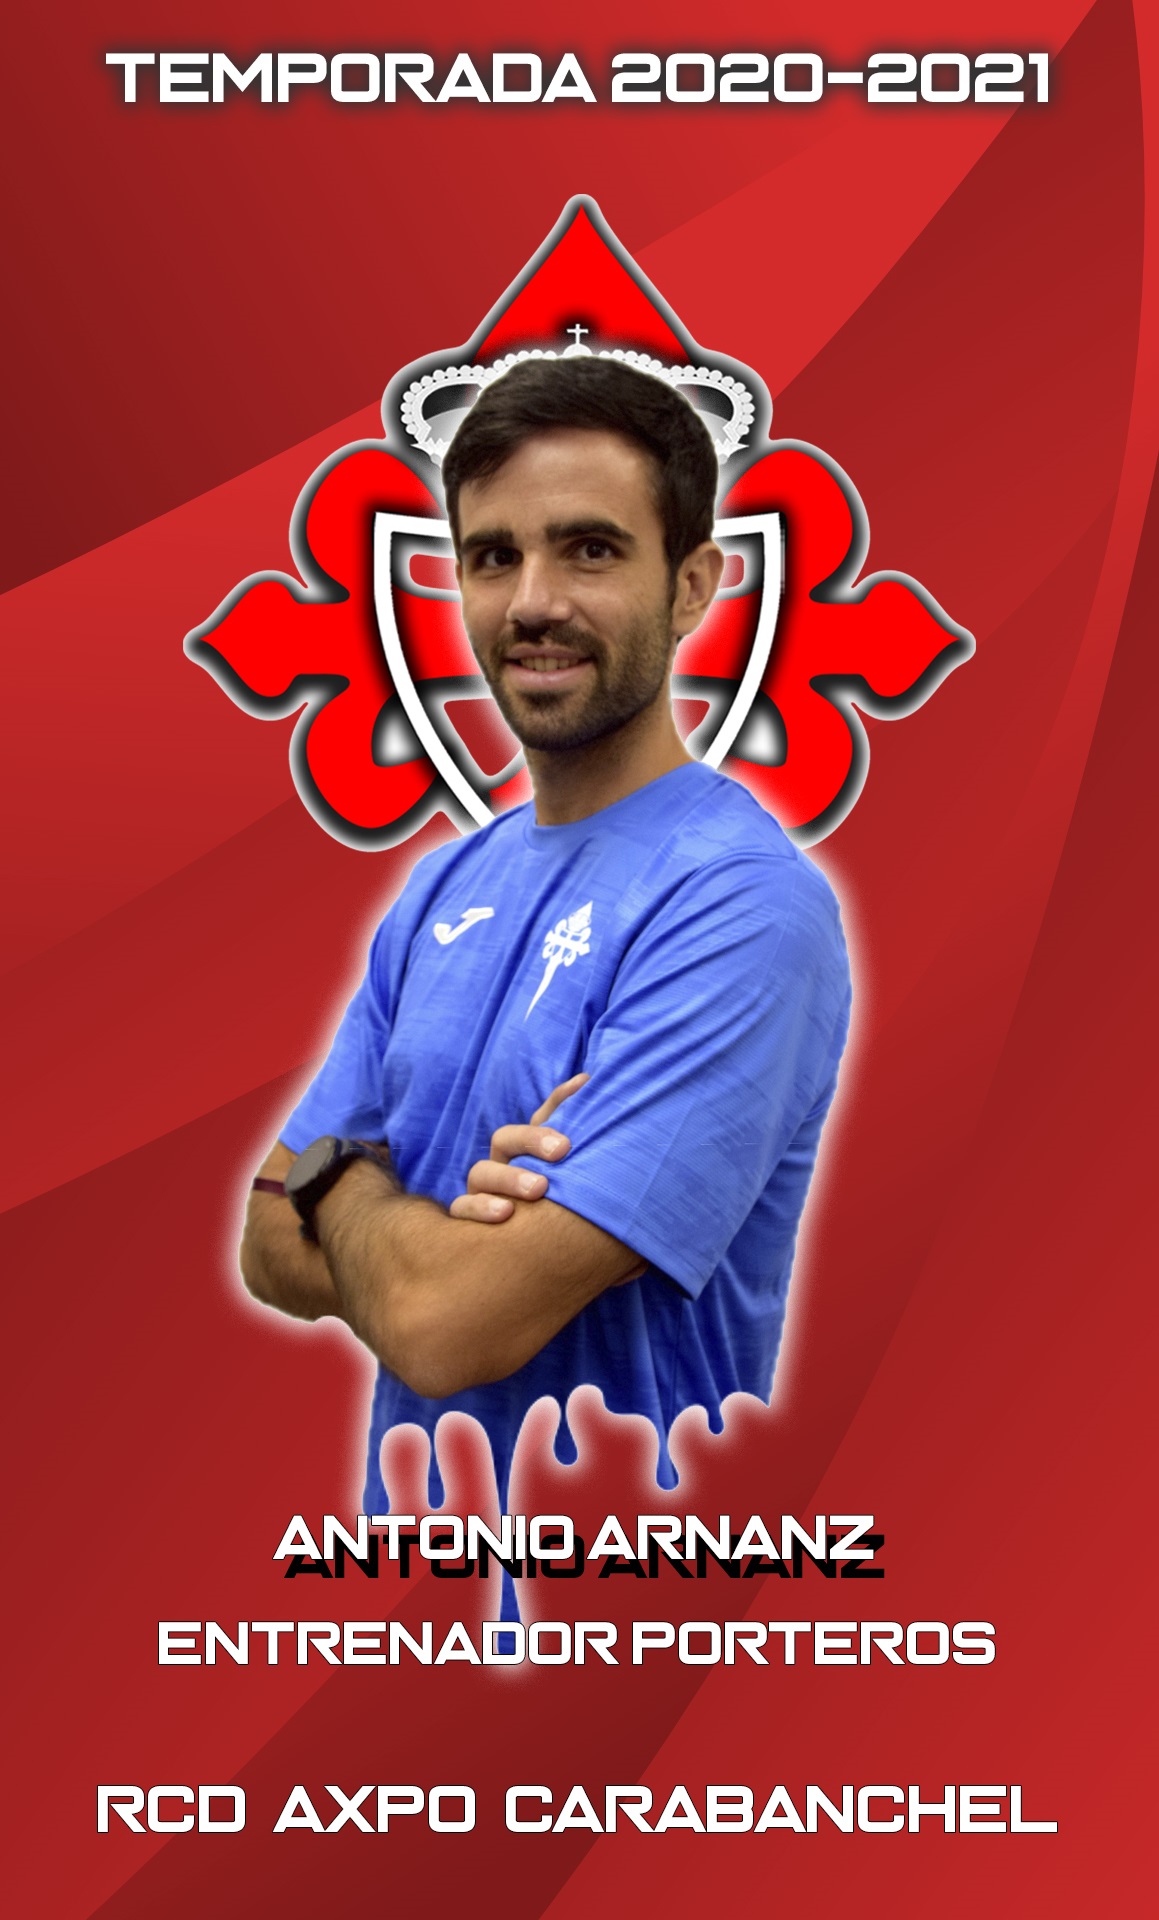 Antonio Arnanz